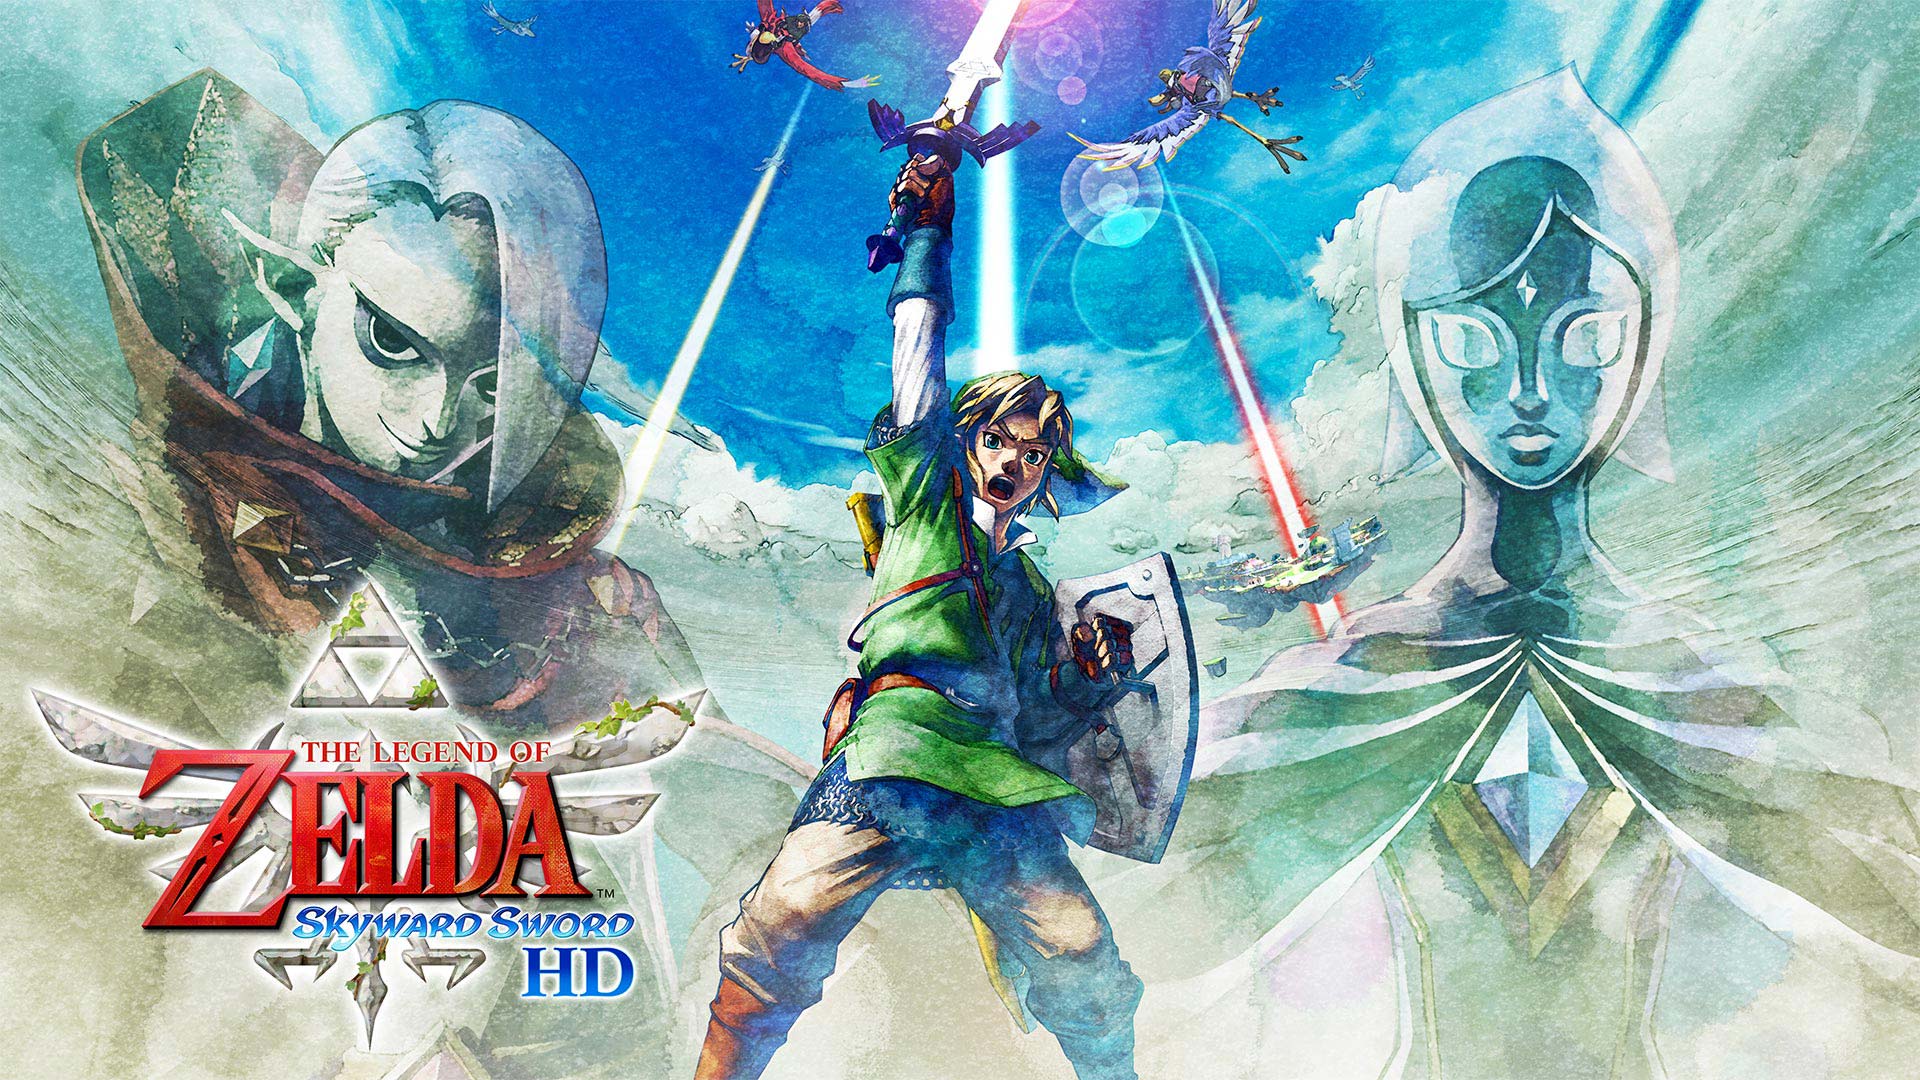 The Legend of Zelda: Skyward Sword HD Release Date